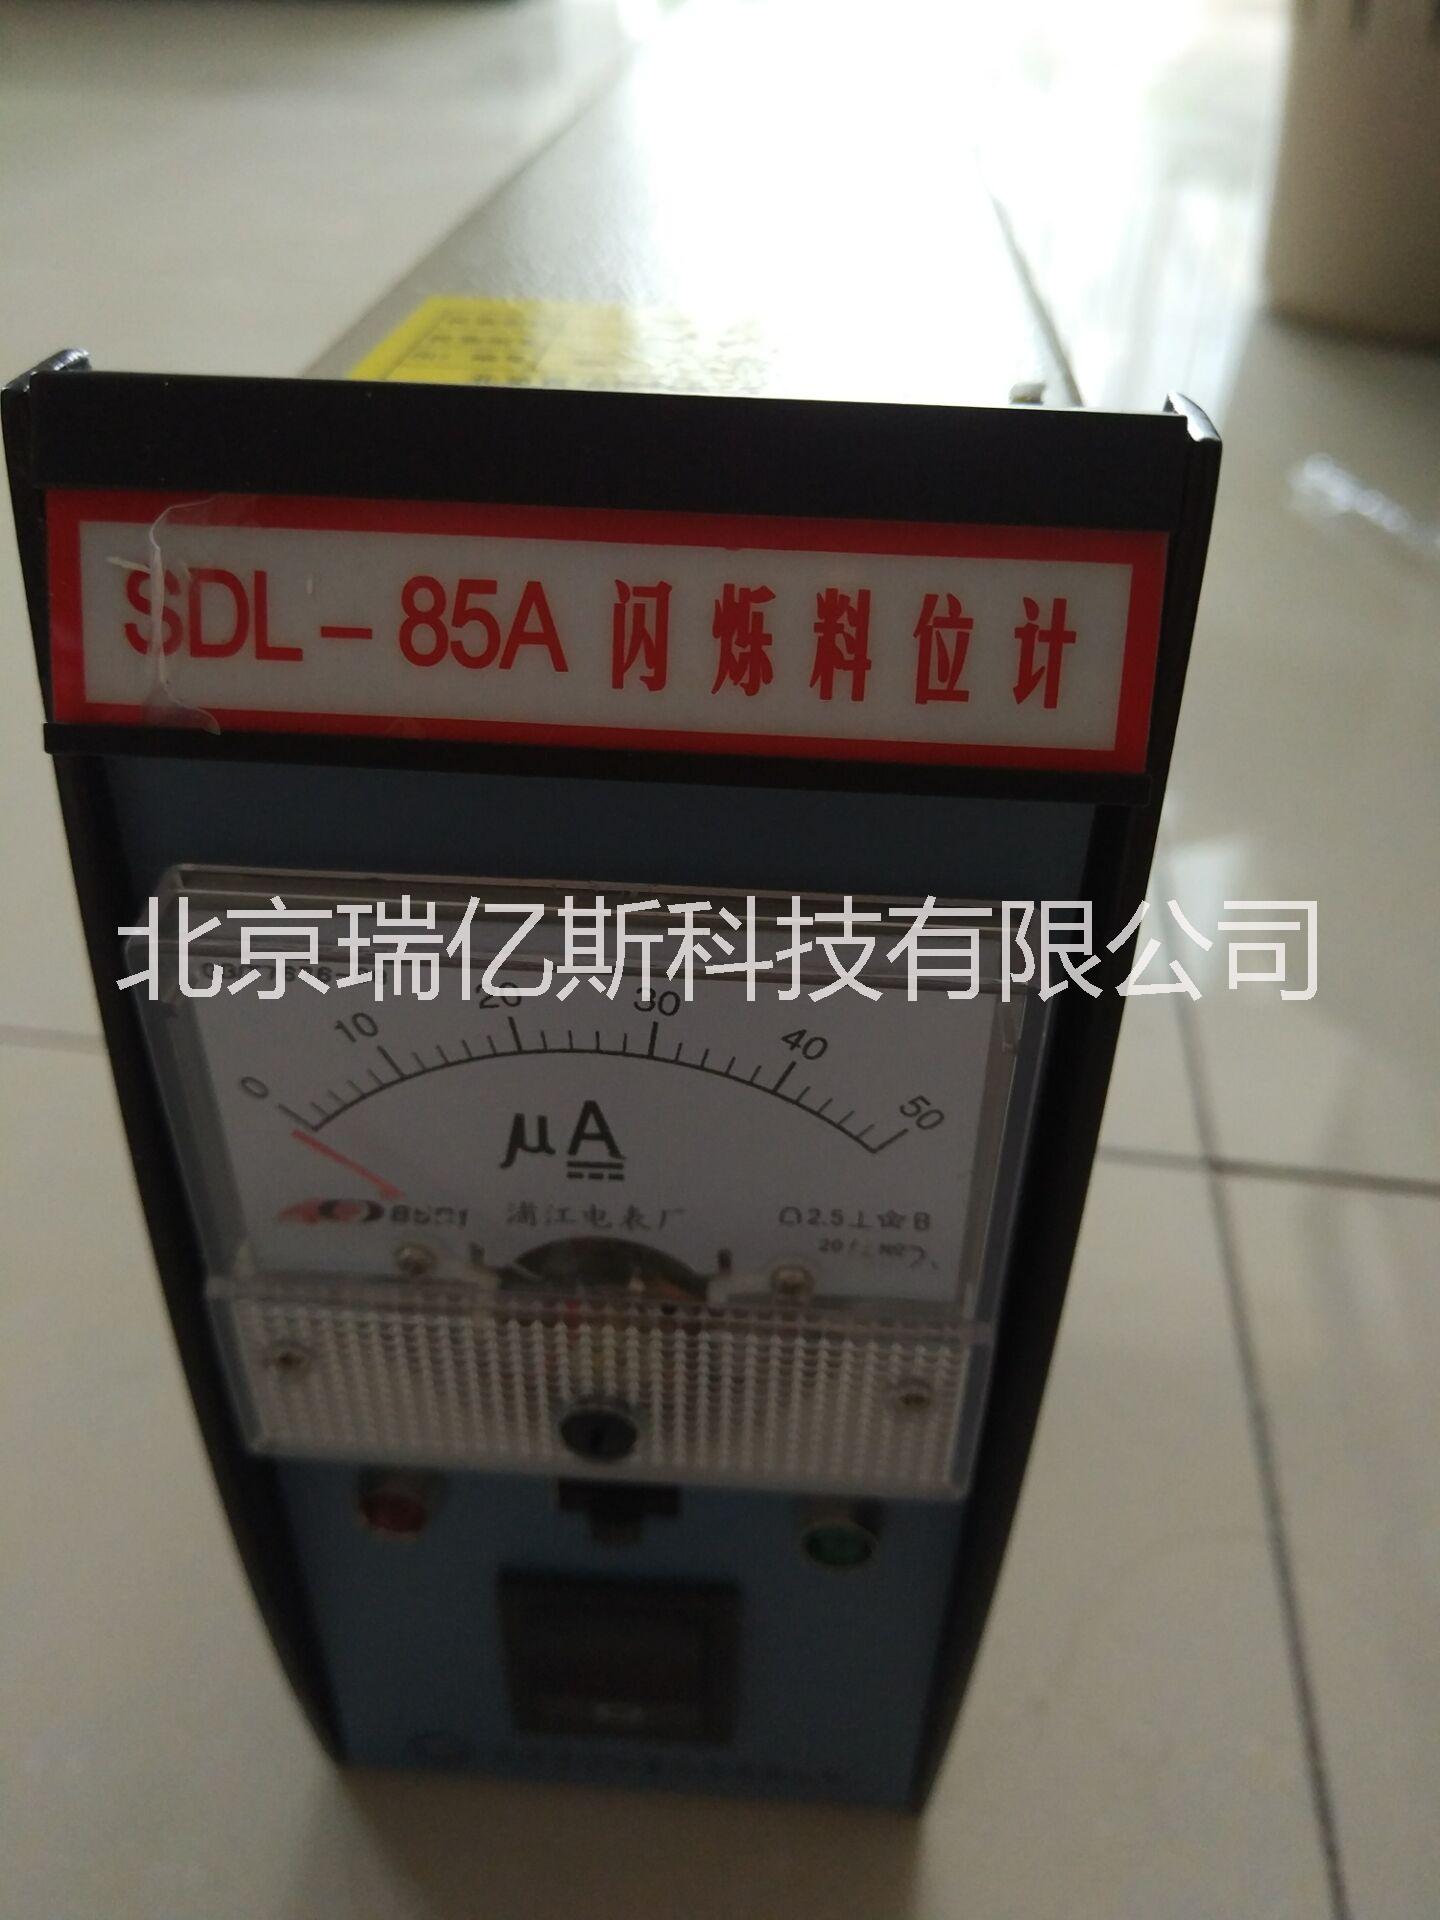 SDL-85A闪烁料位计，伽马射线料位计